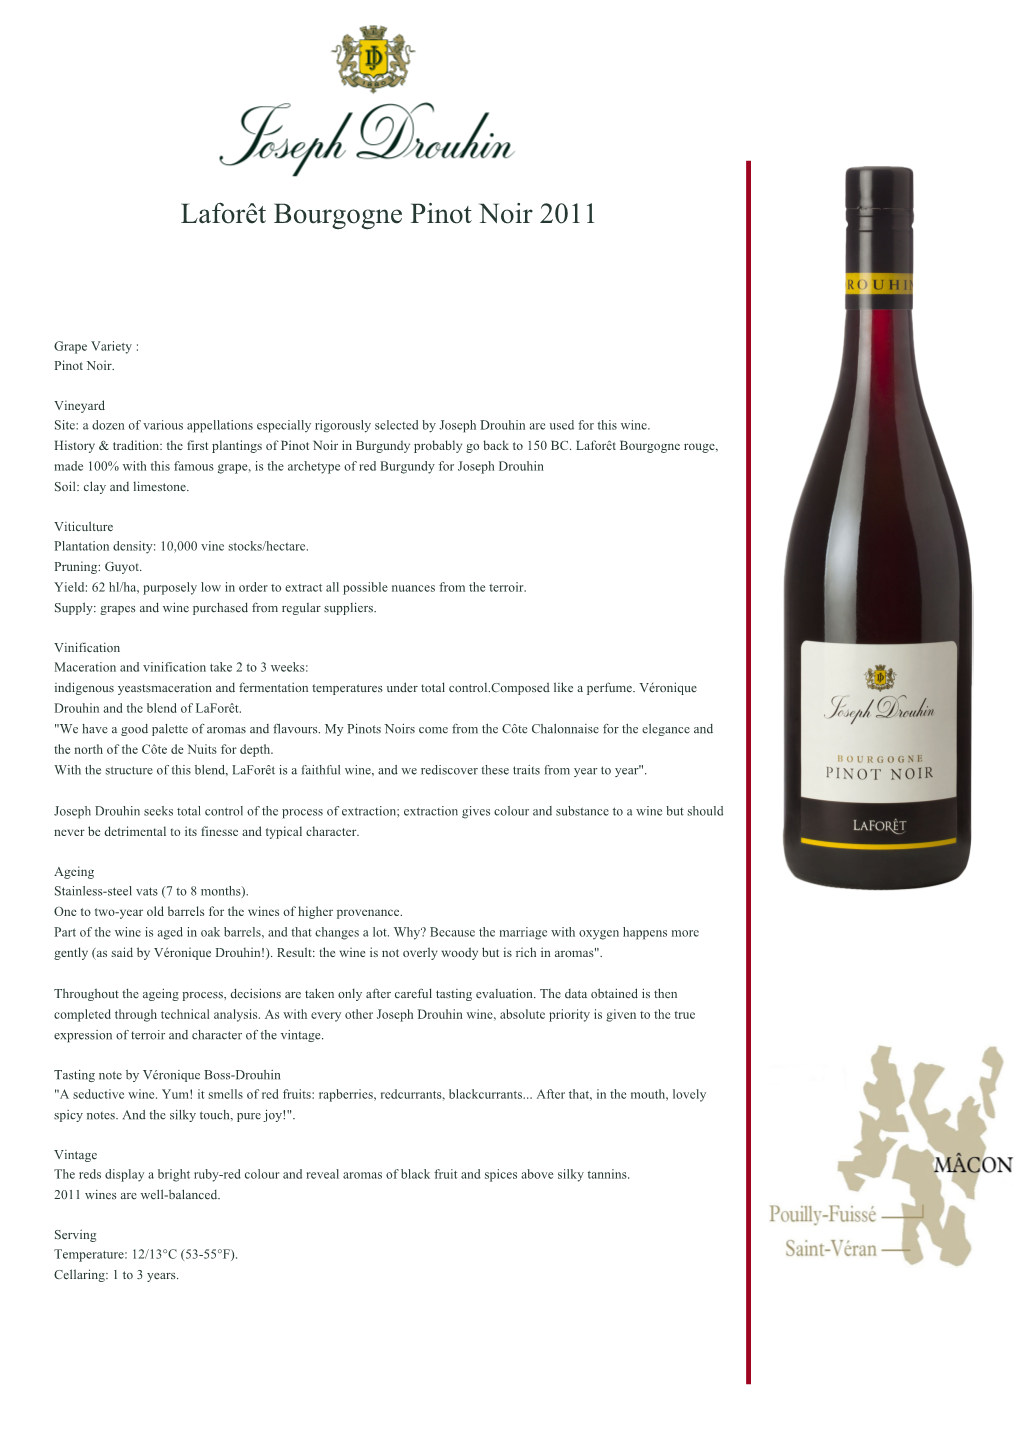 Laforêt Bourgogne Pinot Noir 2011